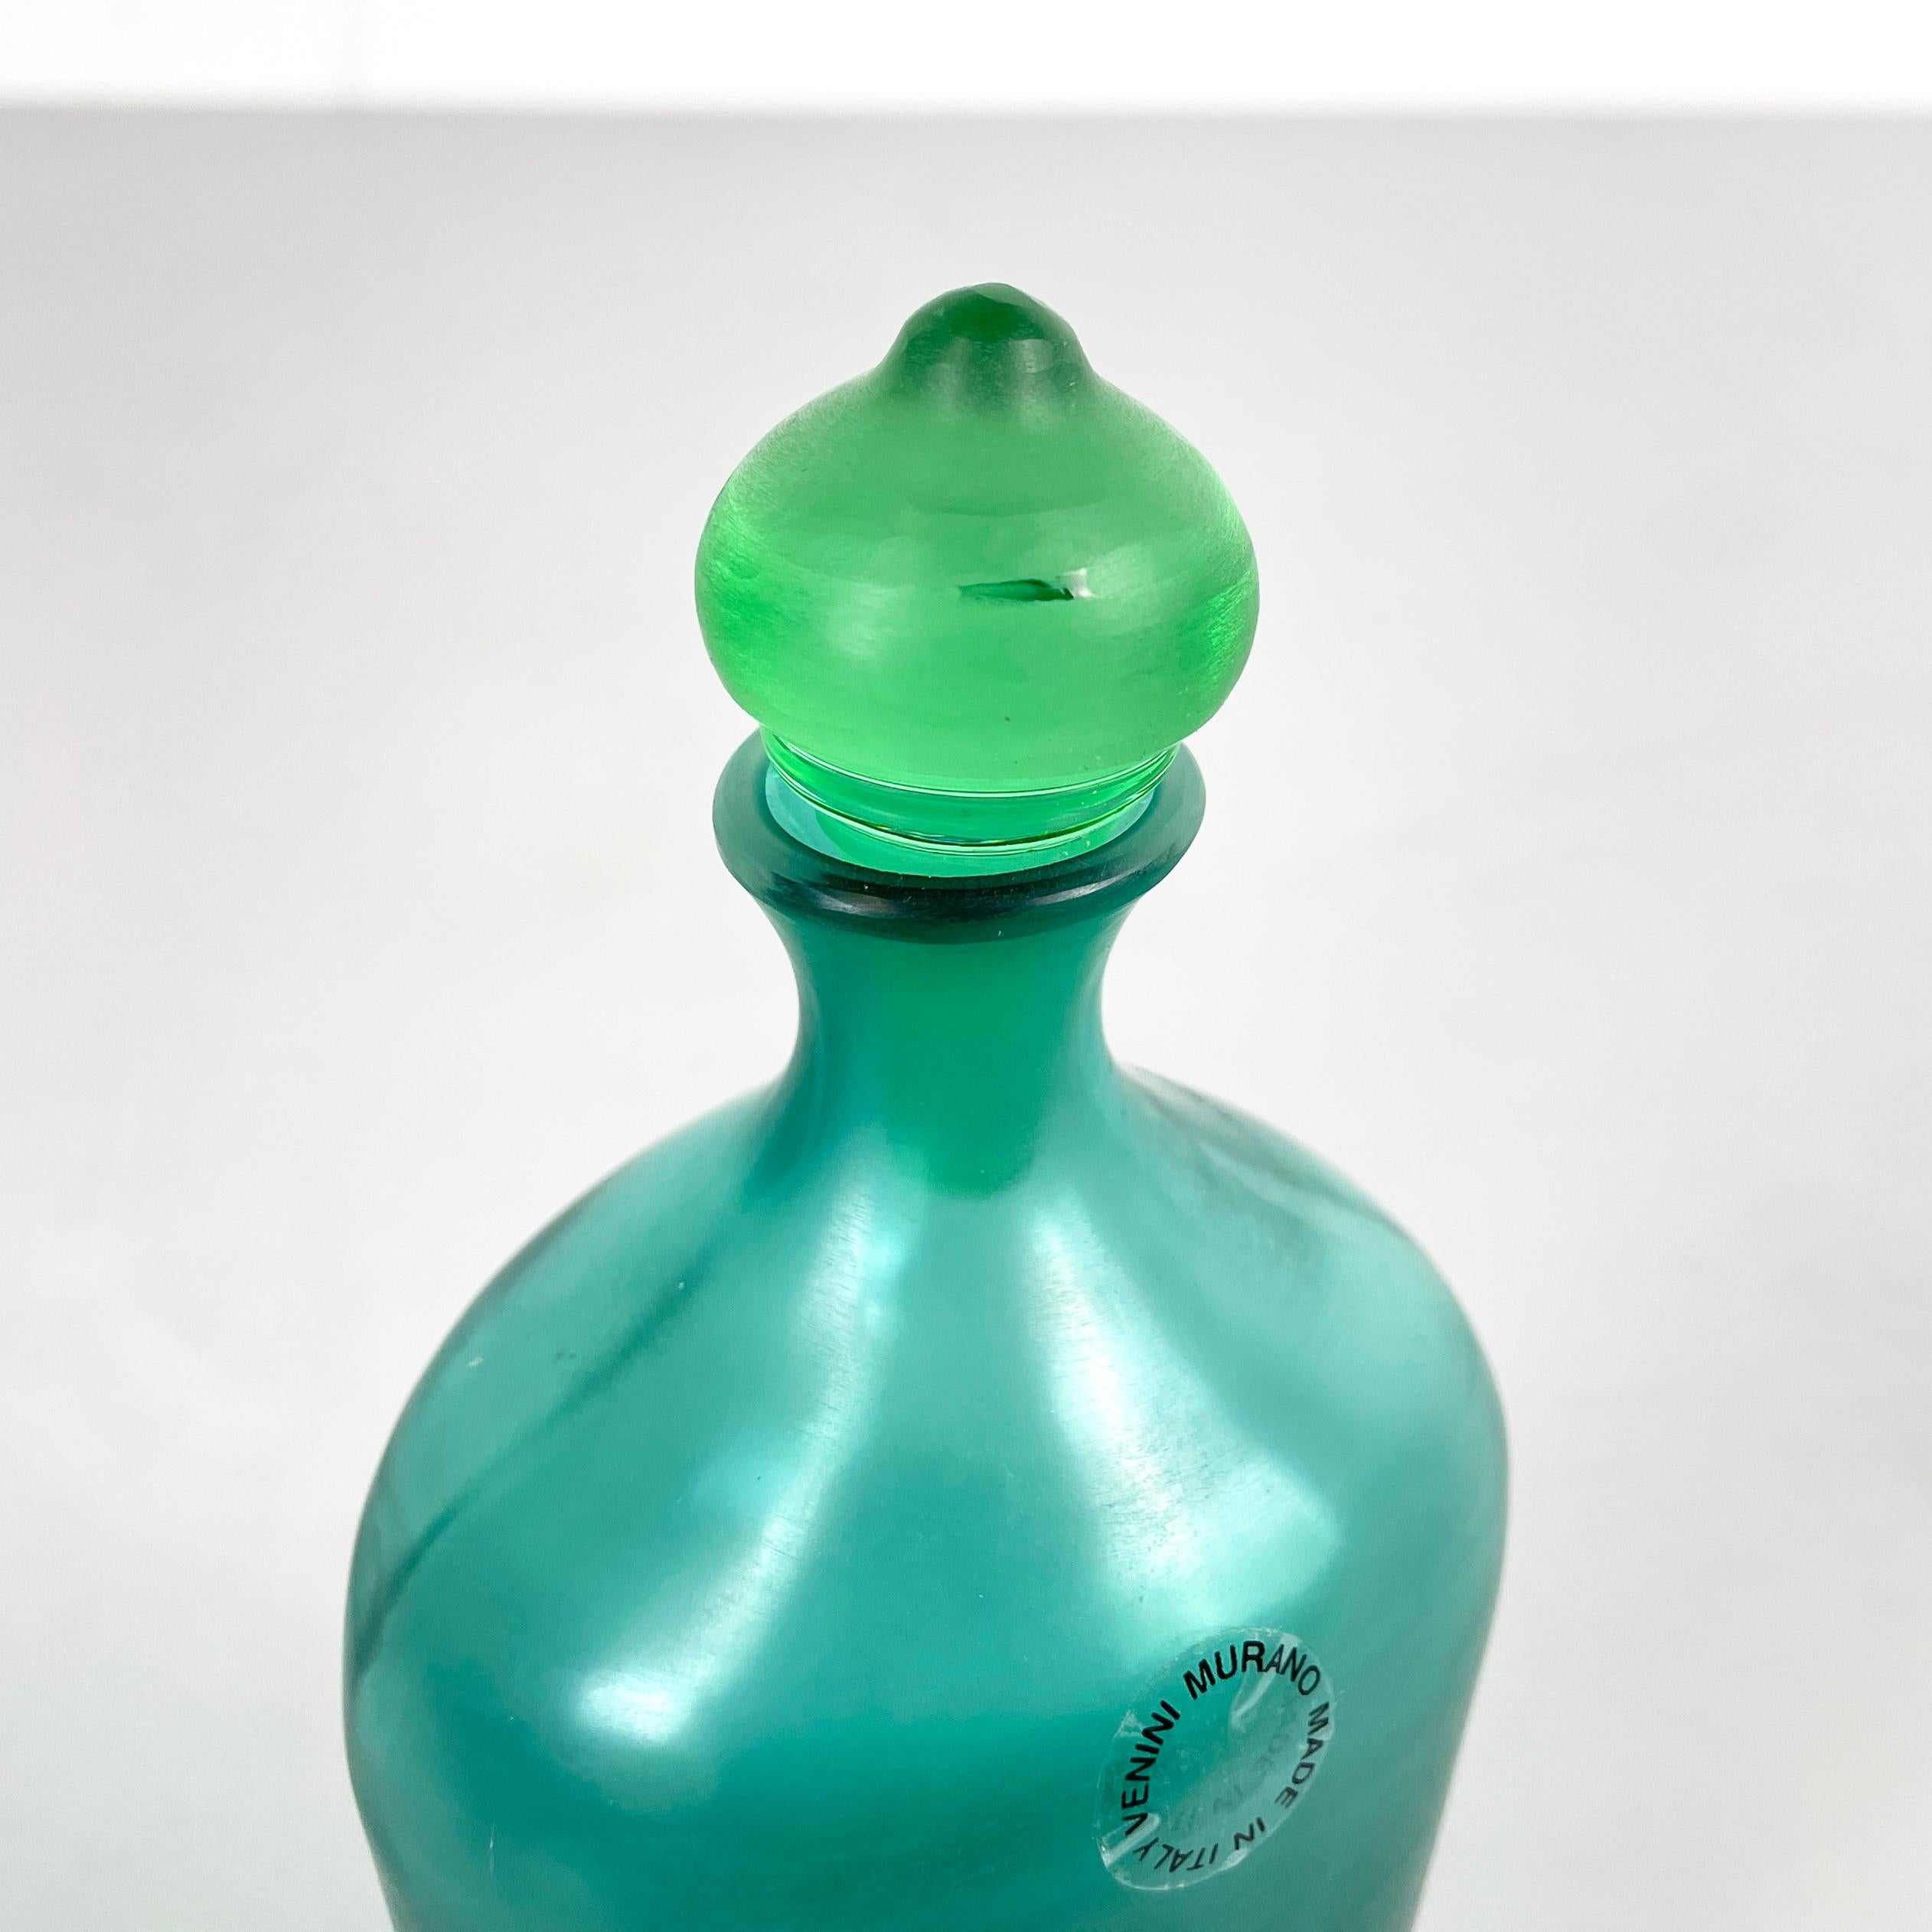 Murano Glass Italian modern Decorative bottle with cap in green Murano glass by Venini, 1990s